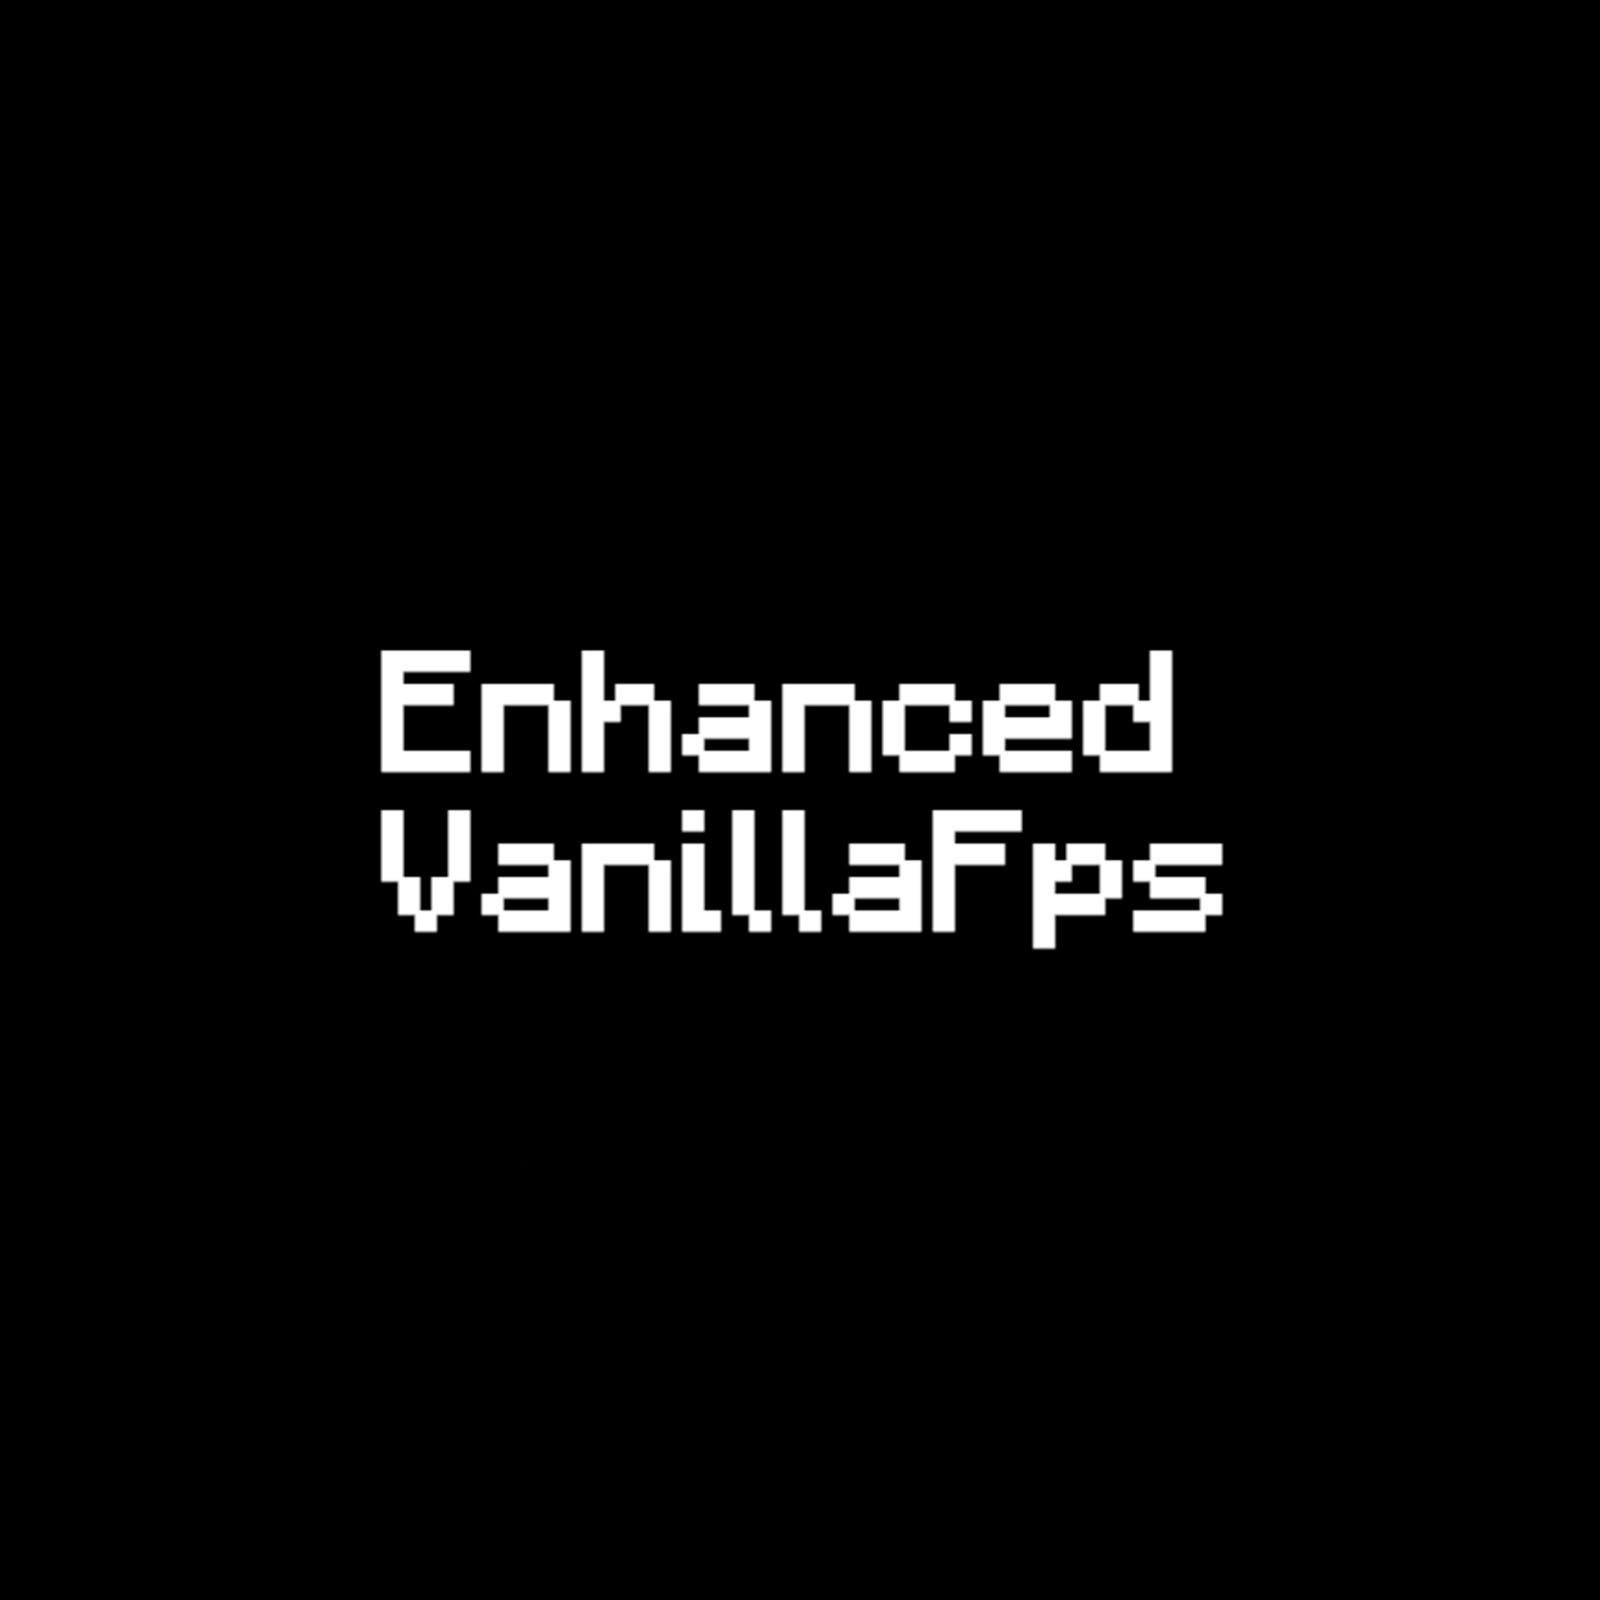 EnhancedVanillaFps